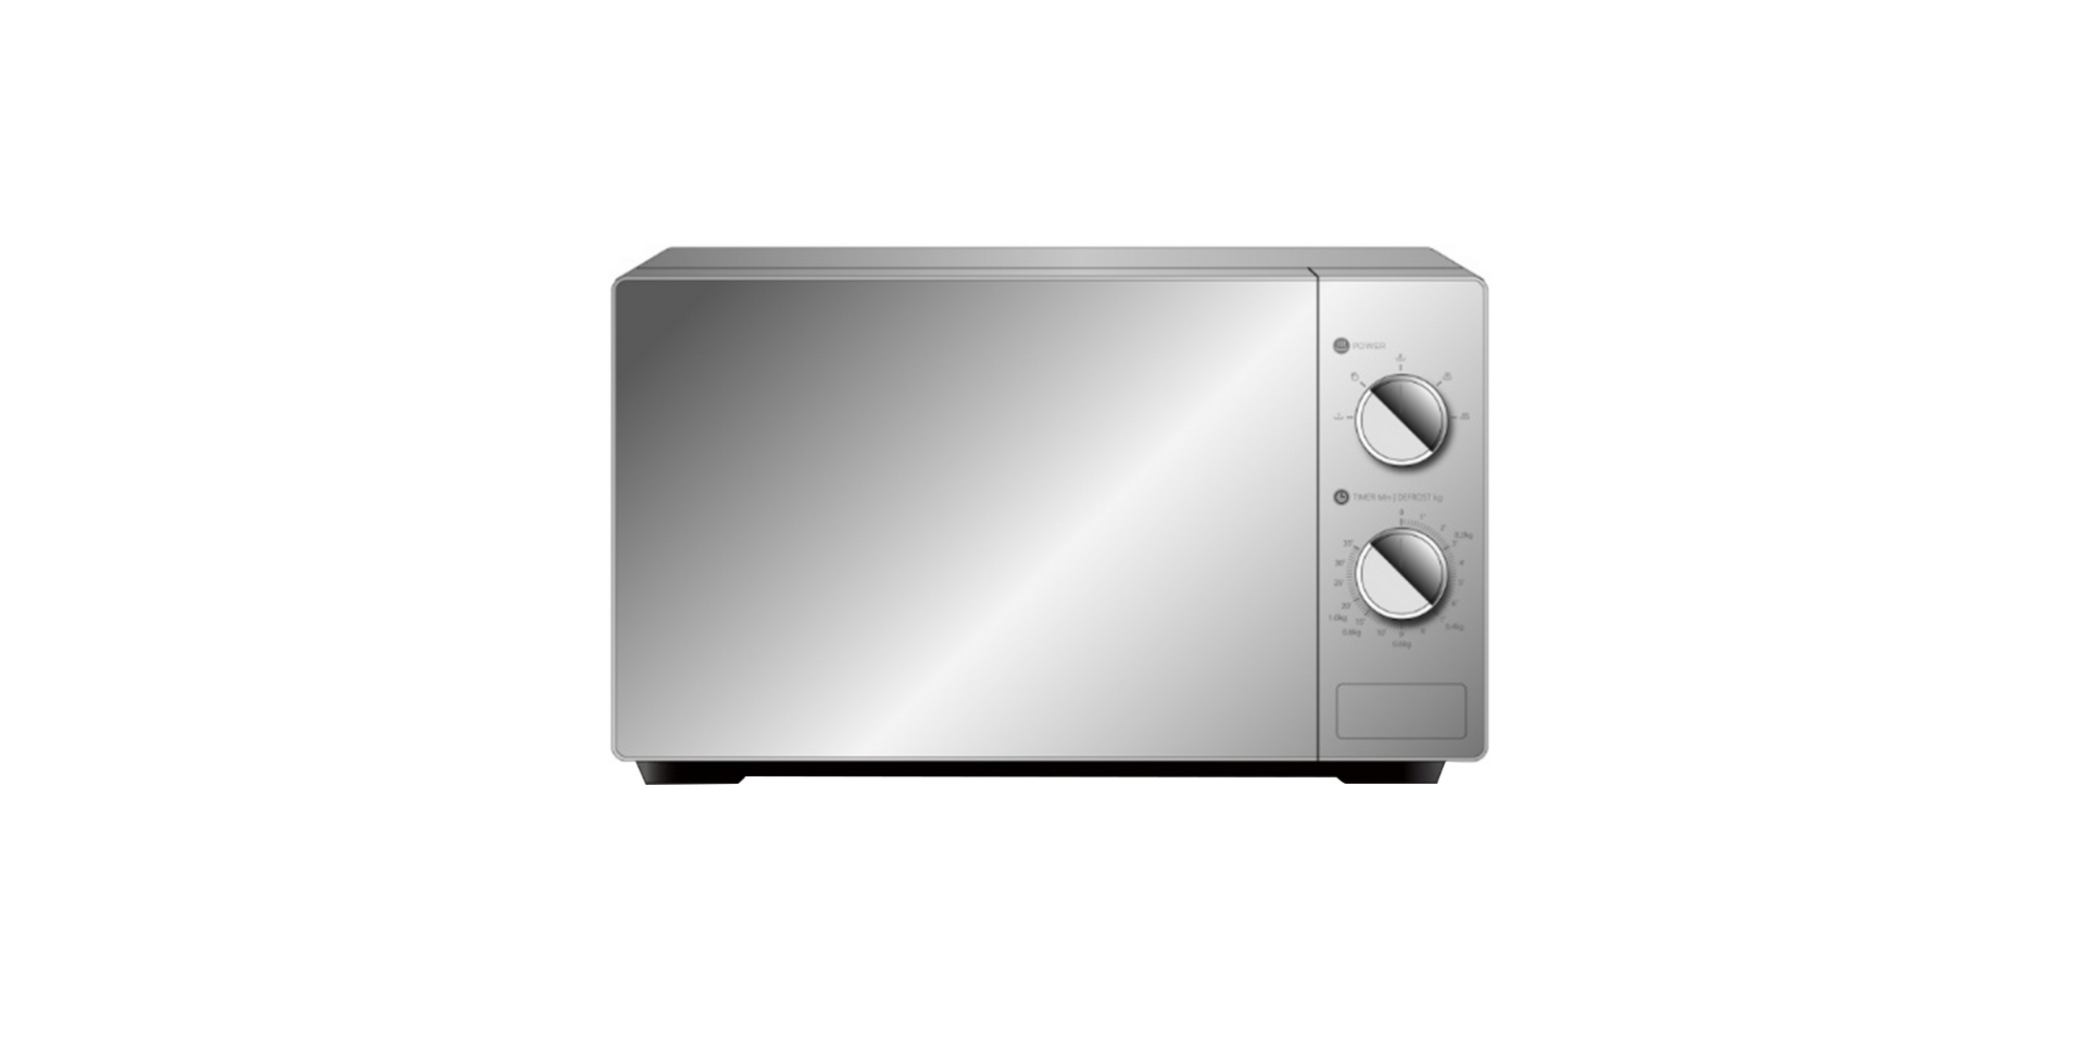 Hisense H20MOMS10 Microwave Oven